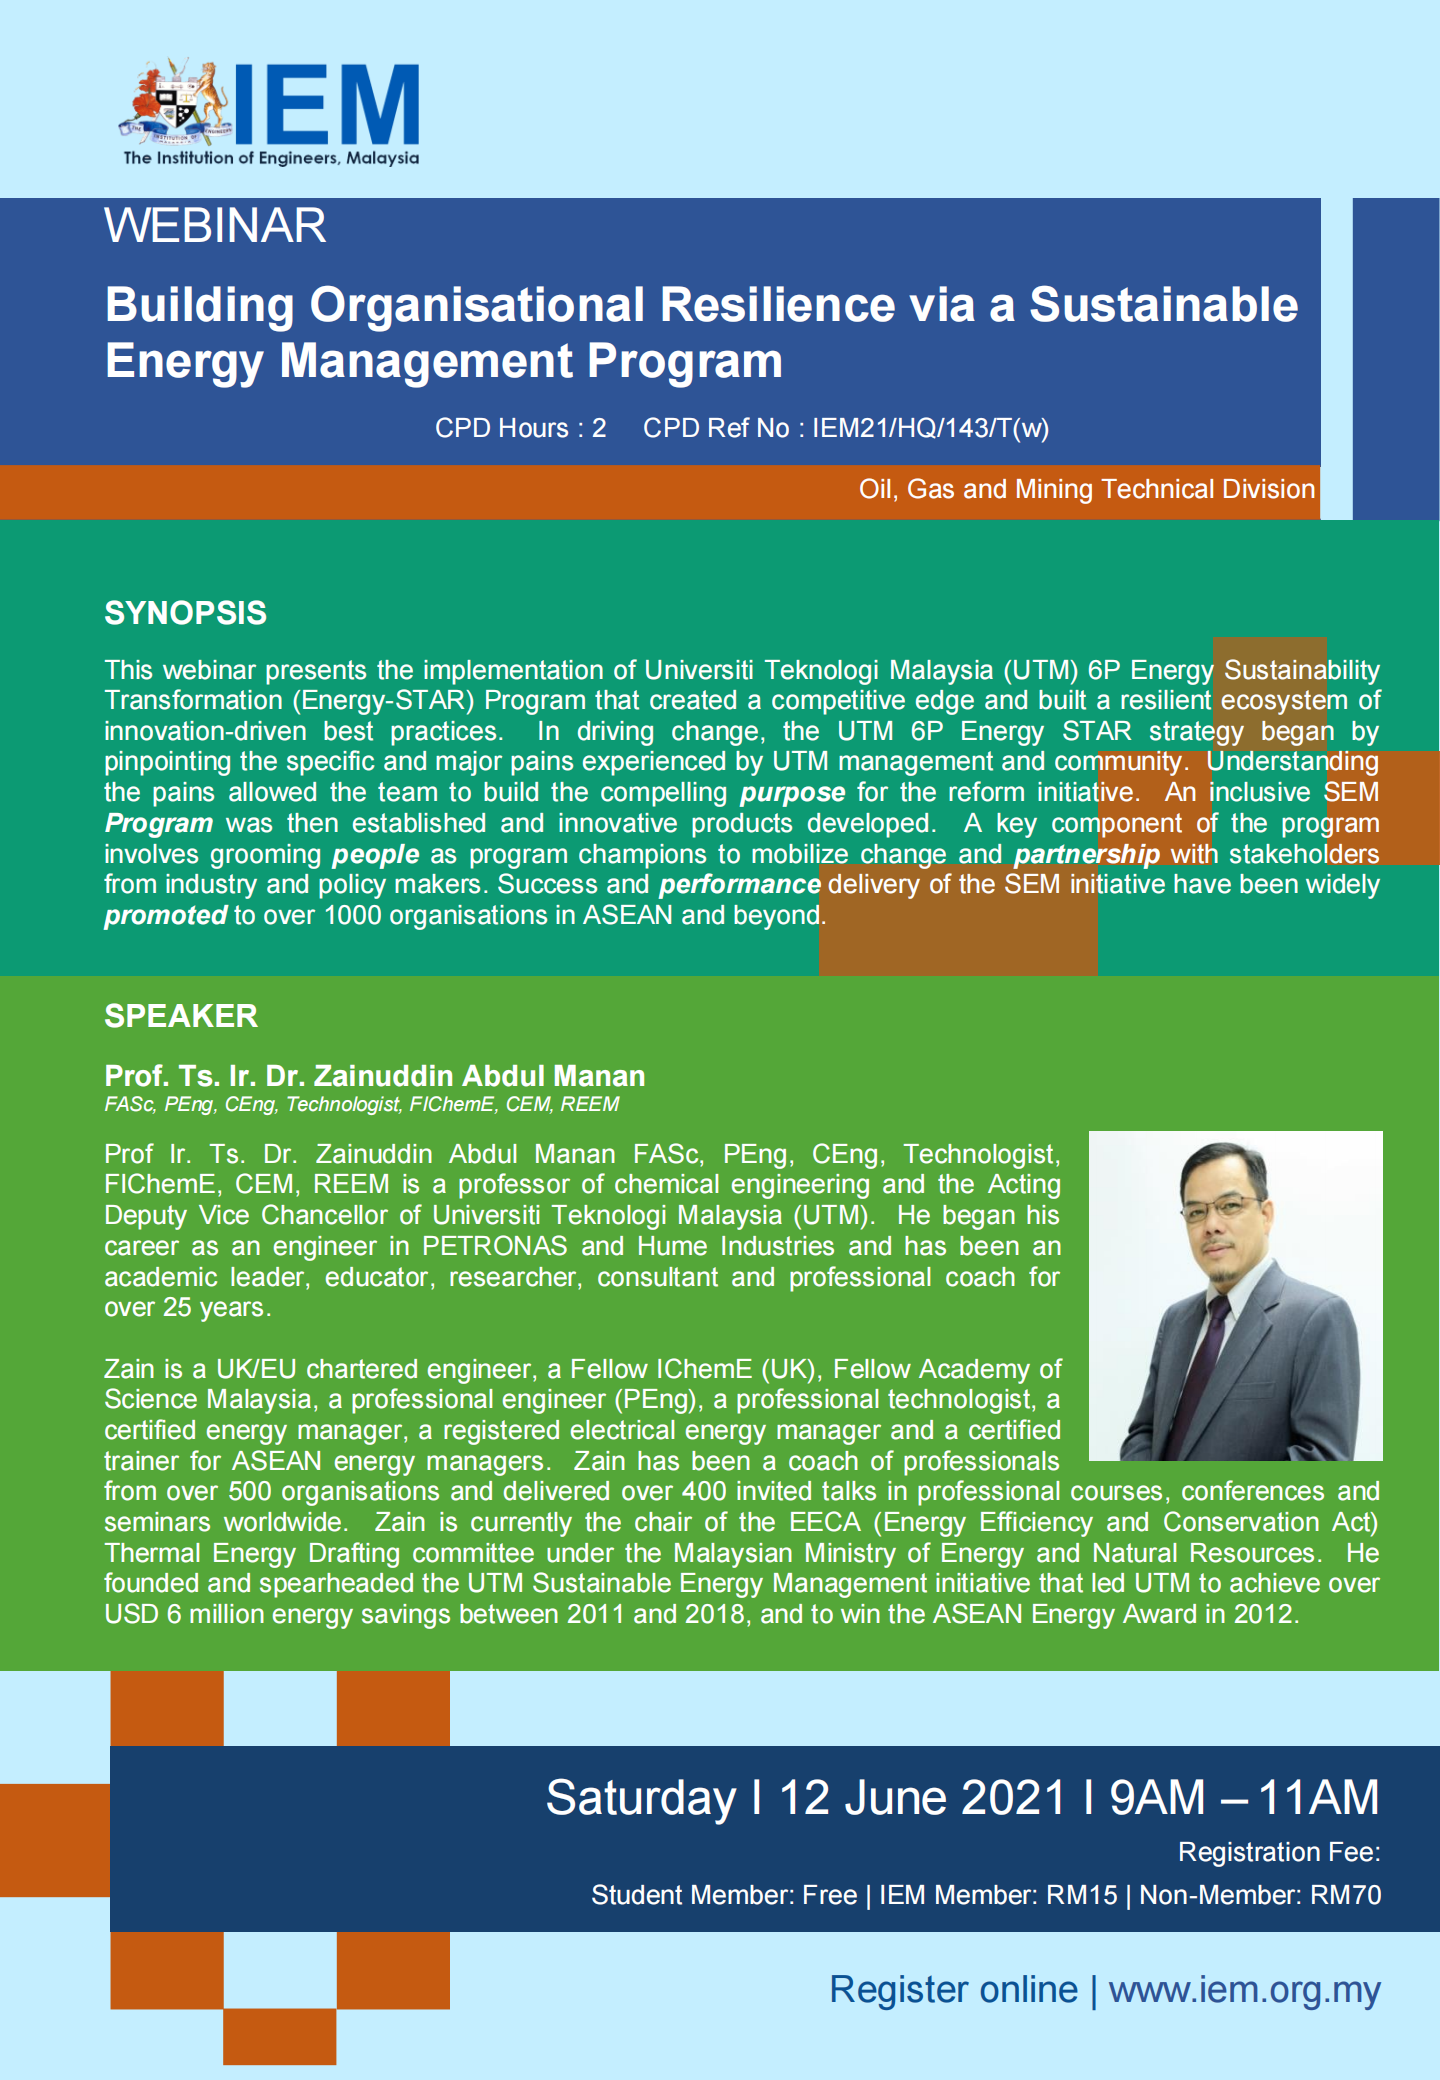 IEM WEBINAR (12 Jun 2021) - Building Organizational Resilience via a Sustainable Energy Management Program 42